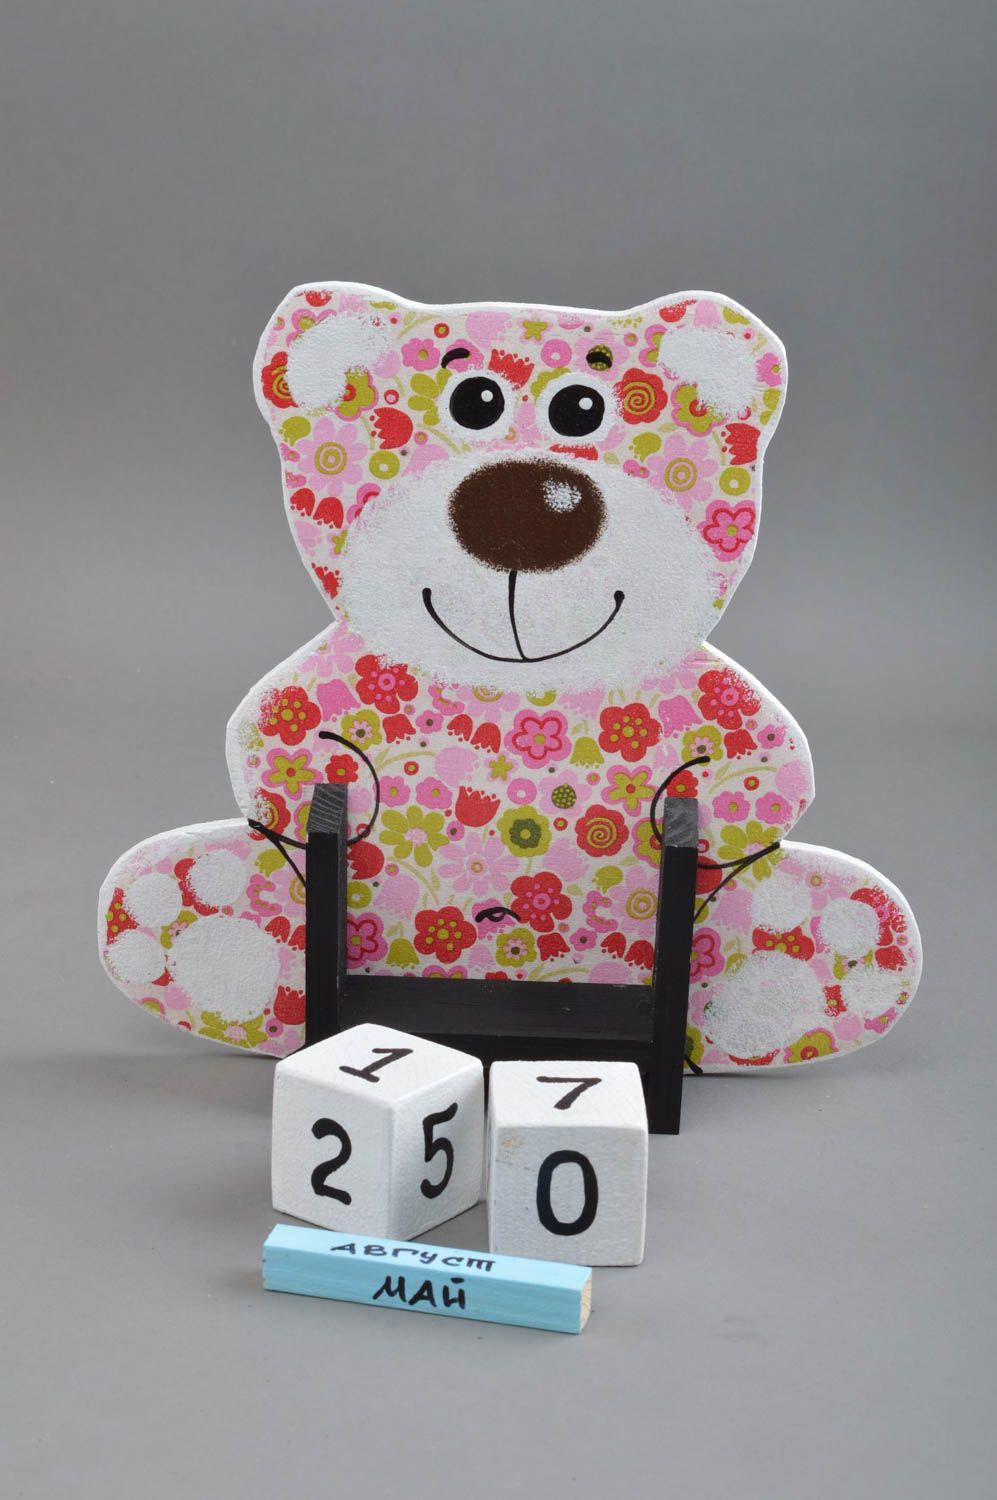 Hübscher Holz Tischkalender Bär für Kinder Decoupage handgeschaffen grell toll foto 3